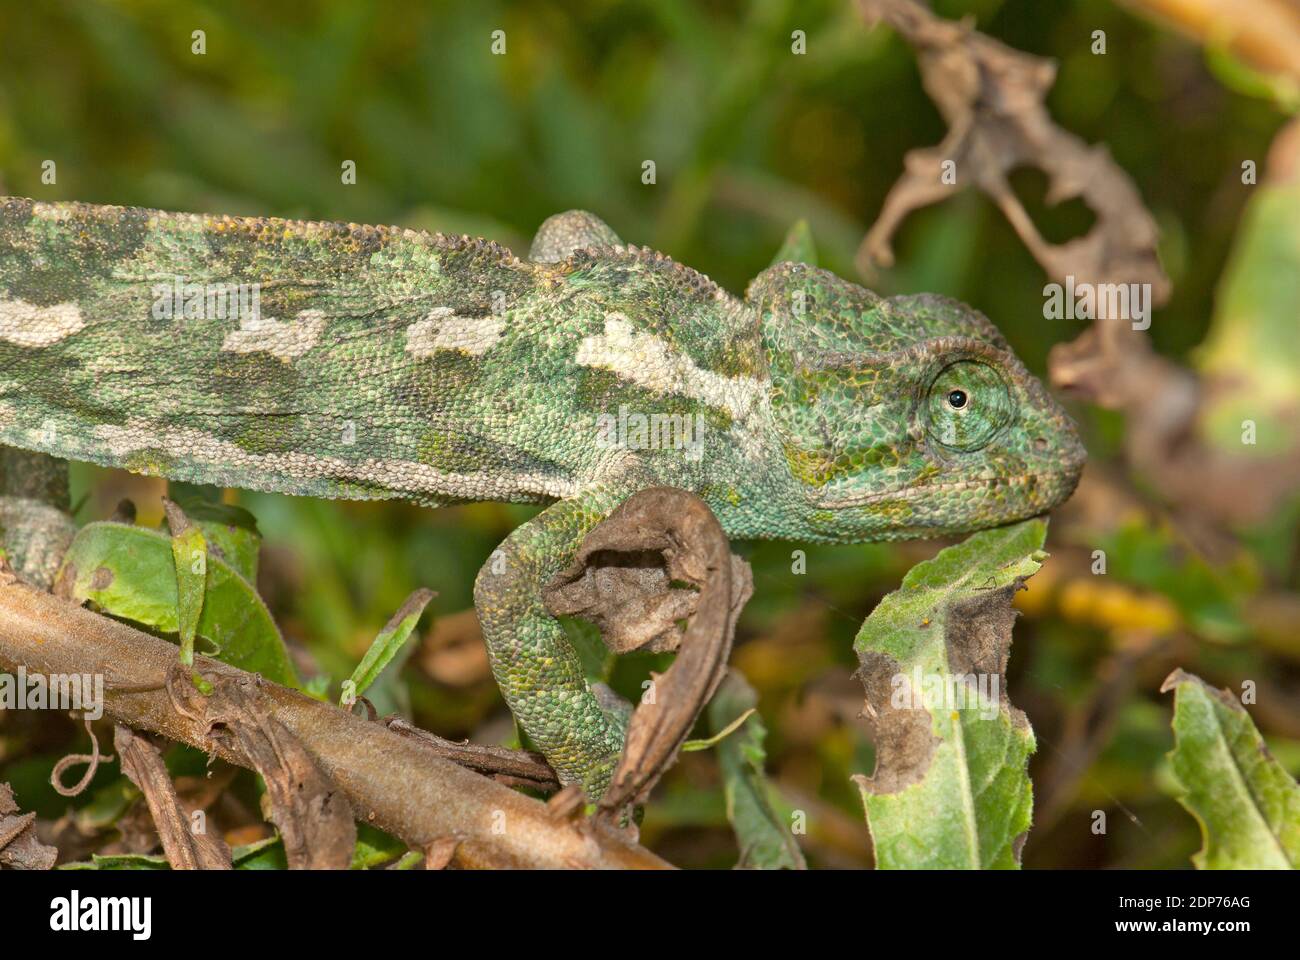 Chameleon camouflage Stock Photo